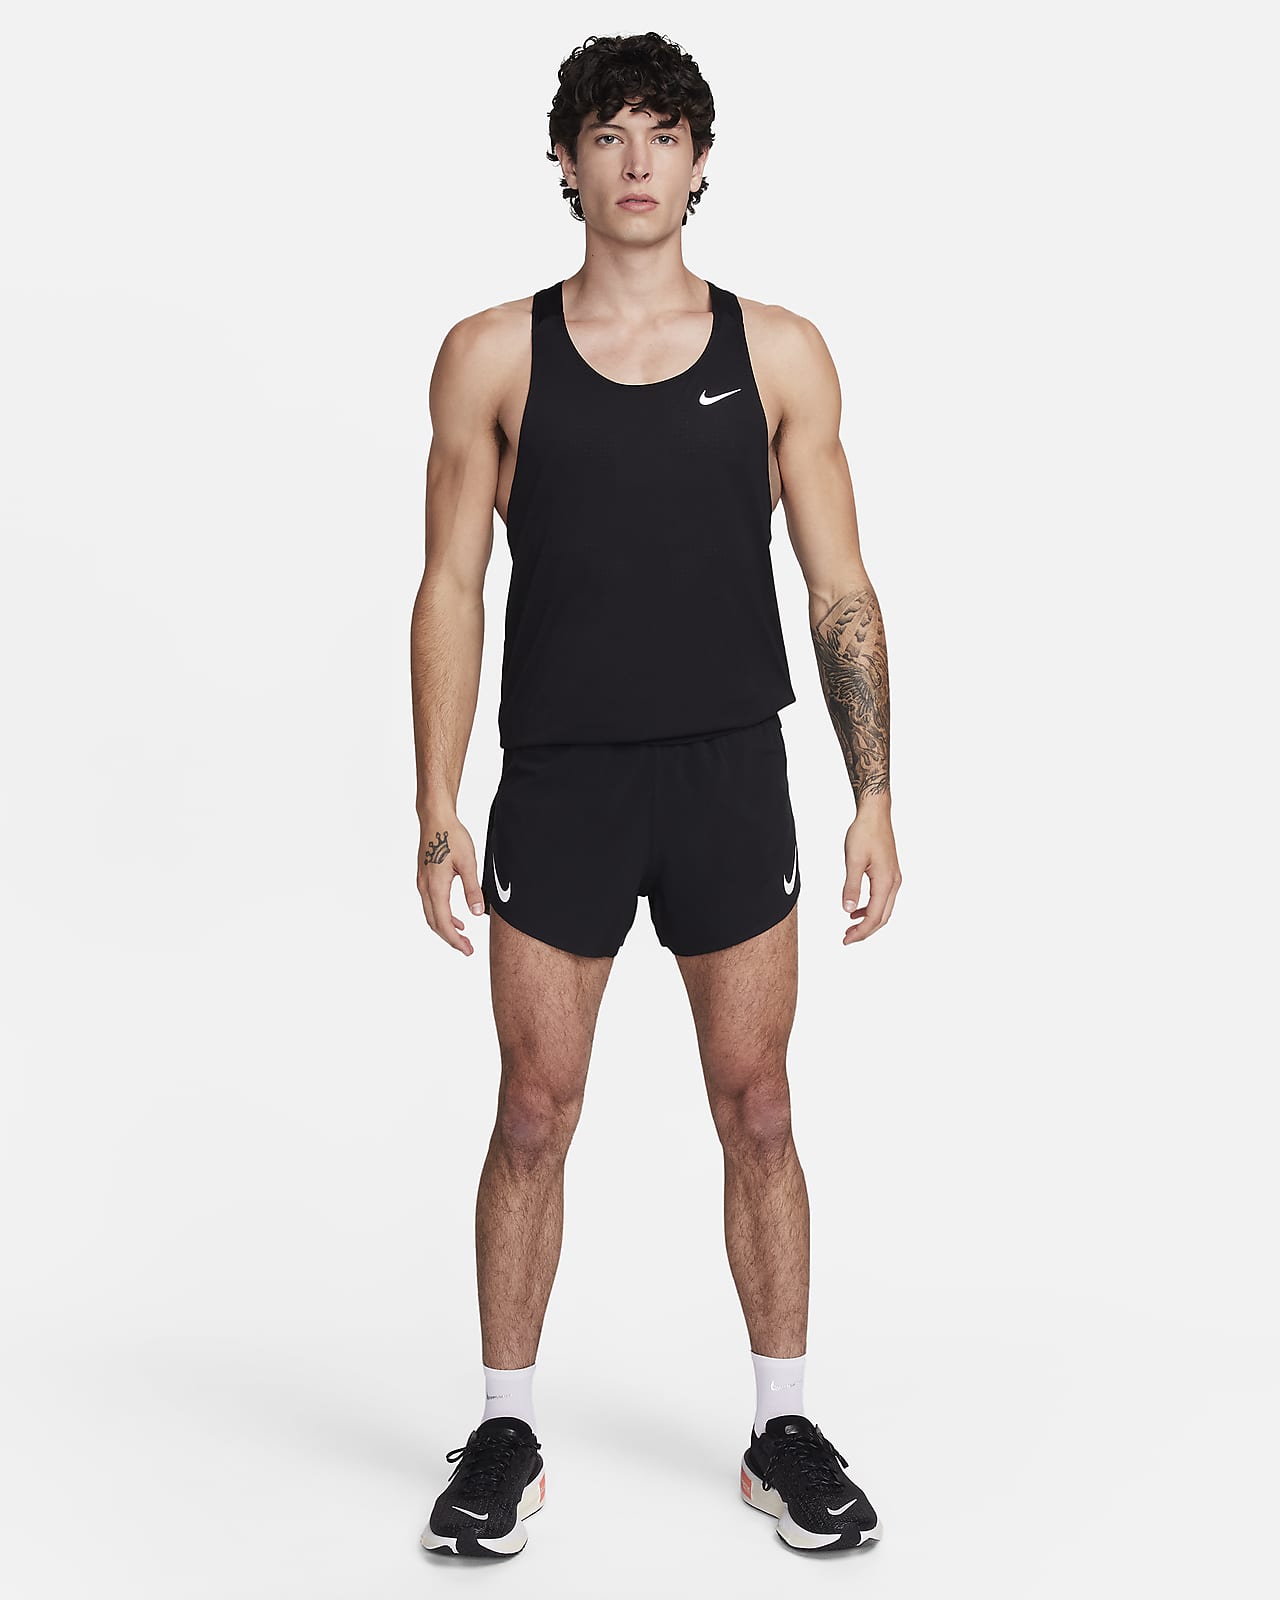 Nike Men's AeroSwift 4 Running Shorts – Heartbreak Hill Running